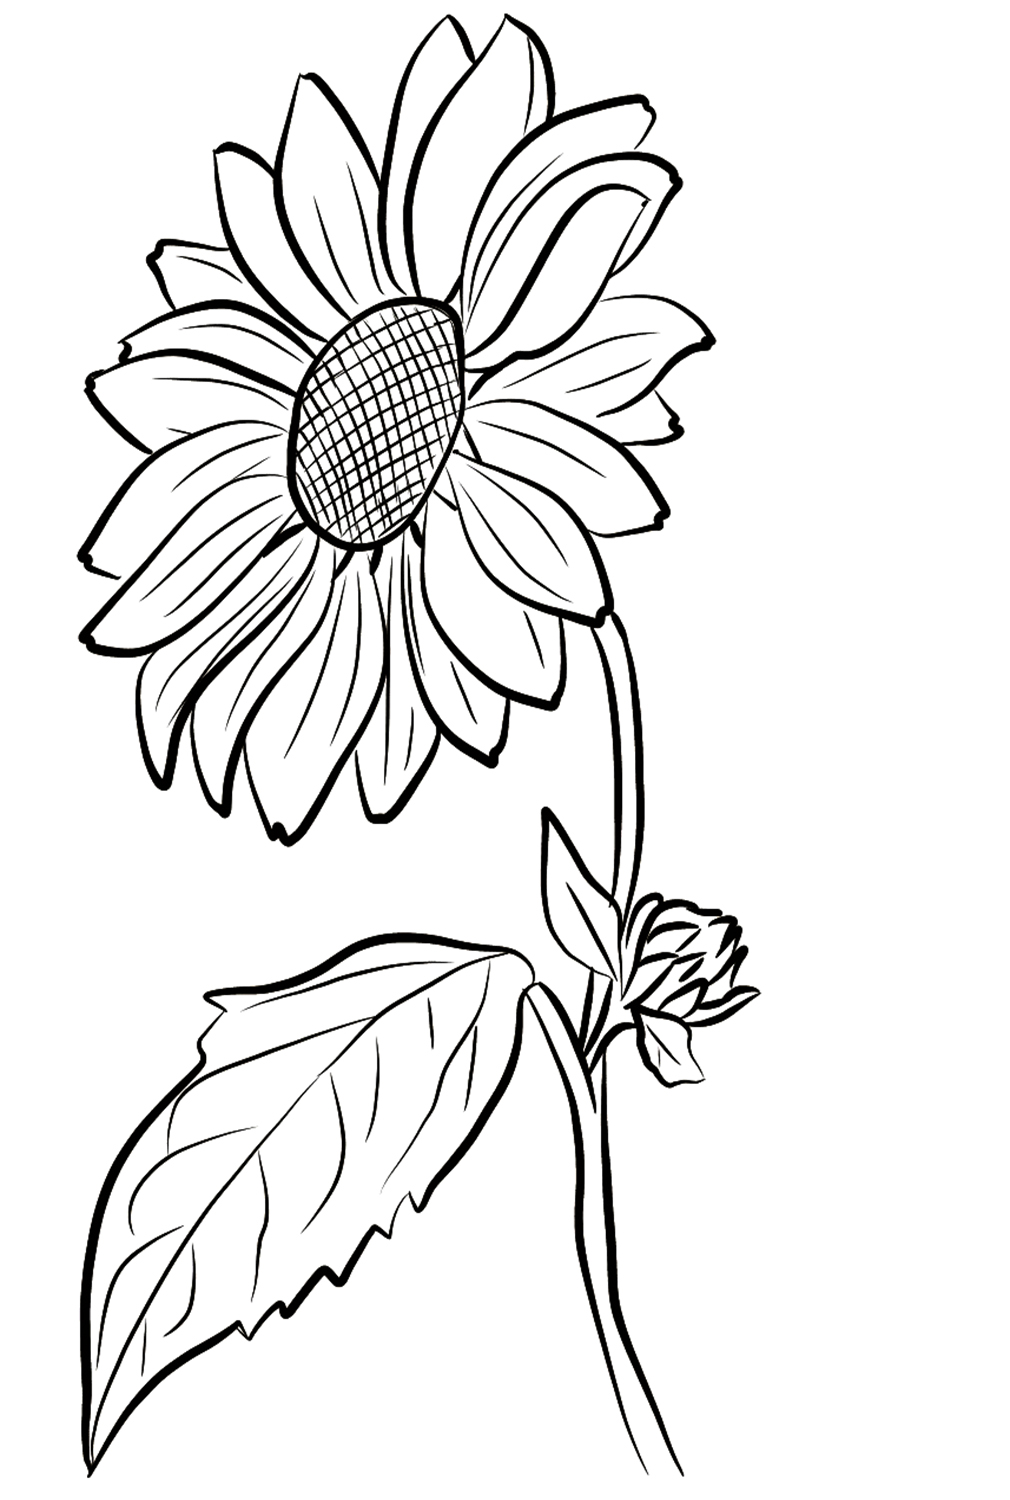 Sunflower Printable from Sunflower